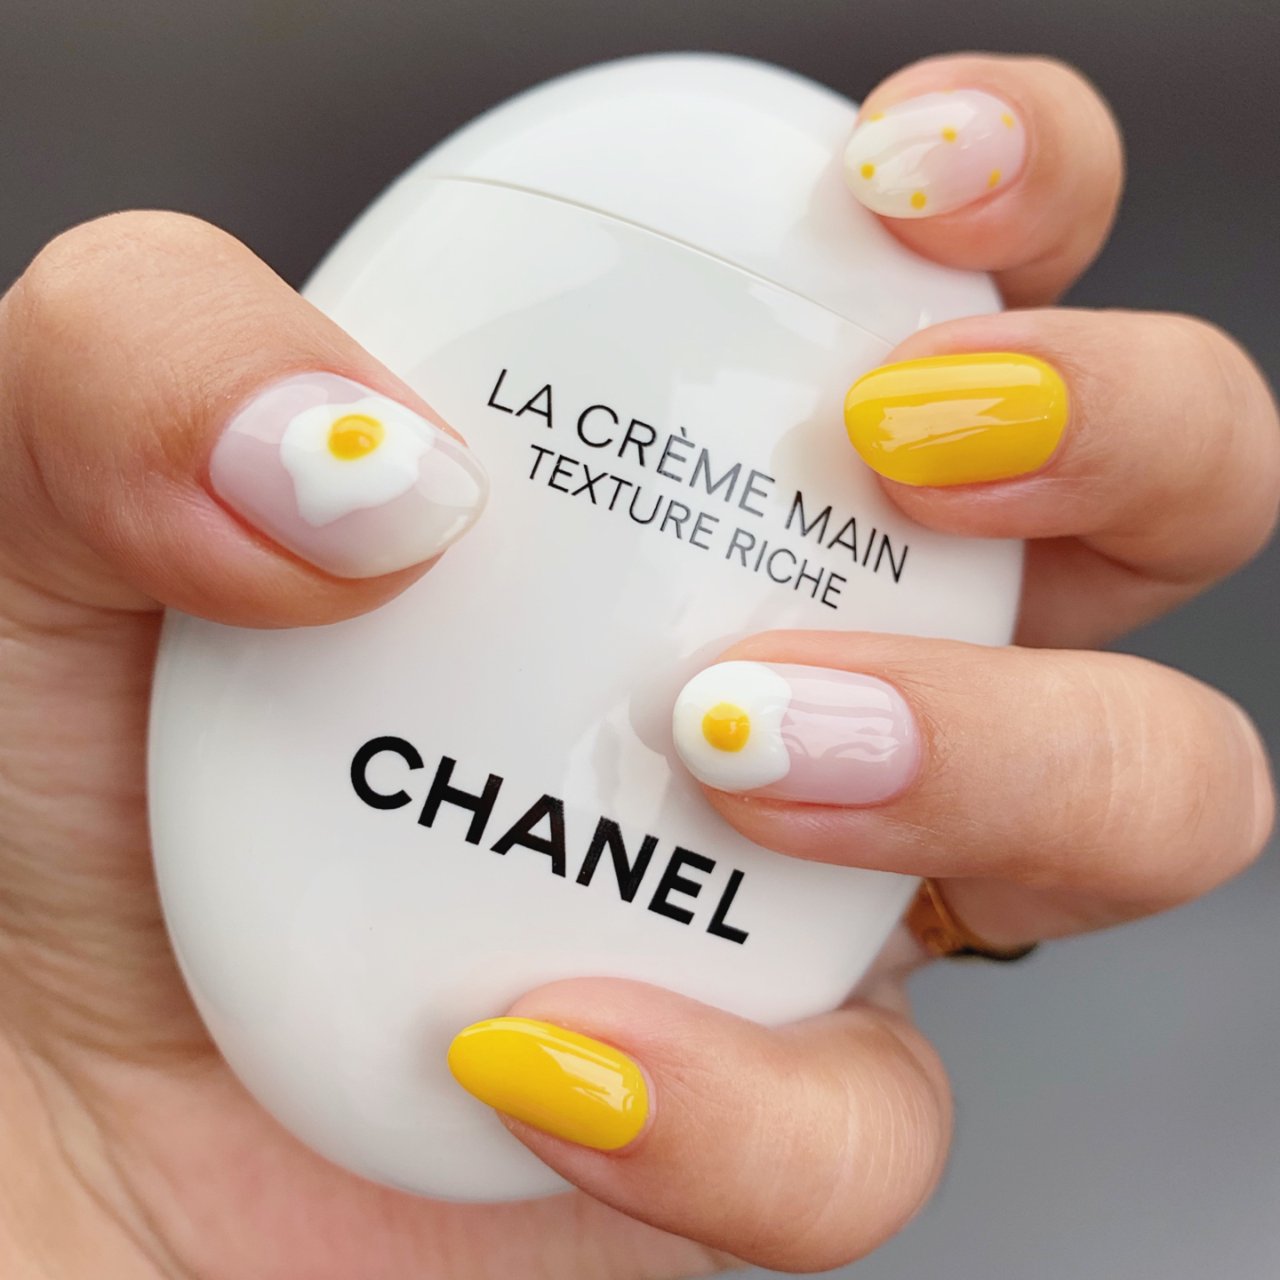 Chanel 香奈儿,美甲,活力黄